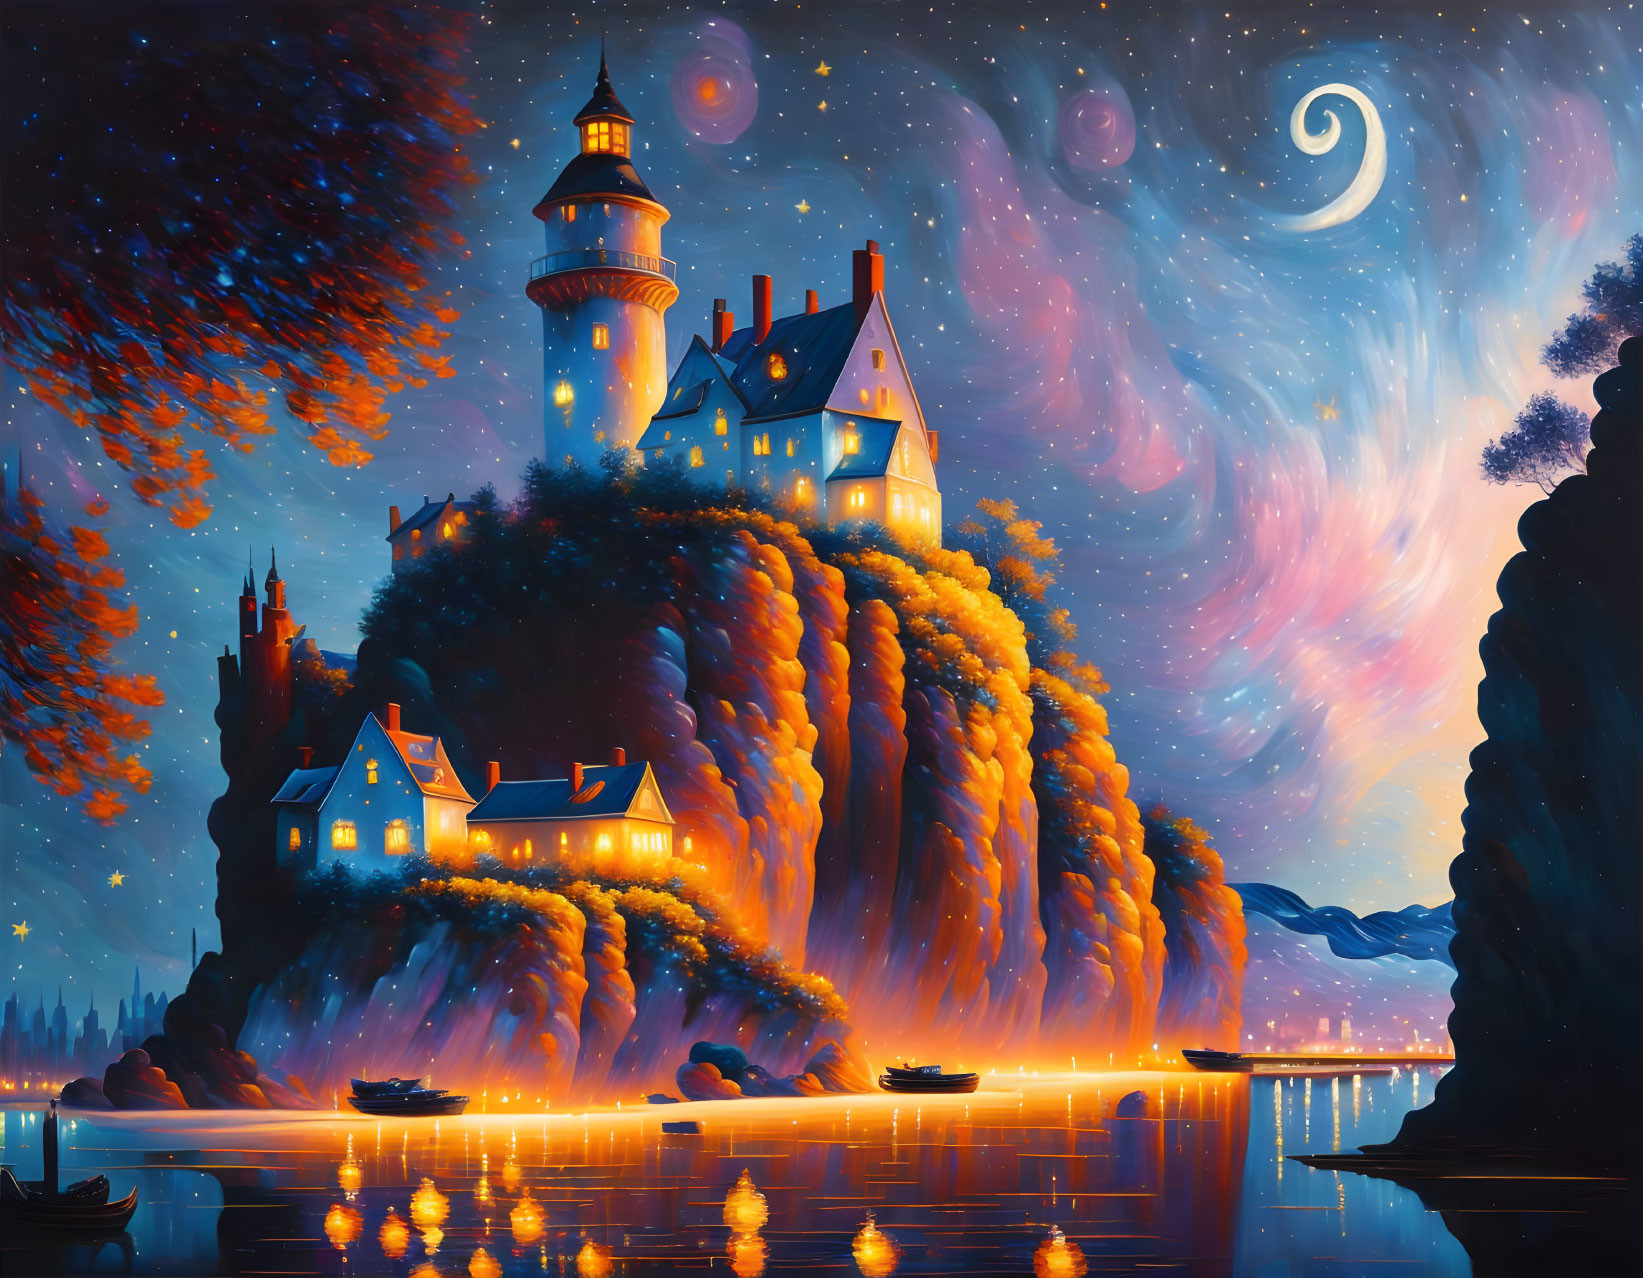 Colorful fantasy artwork: Lighthouse, cliff, illuminated houses, autumn trees, night sky, stars